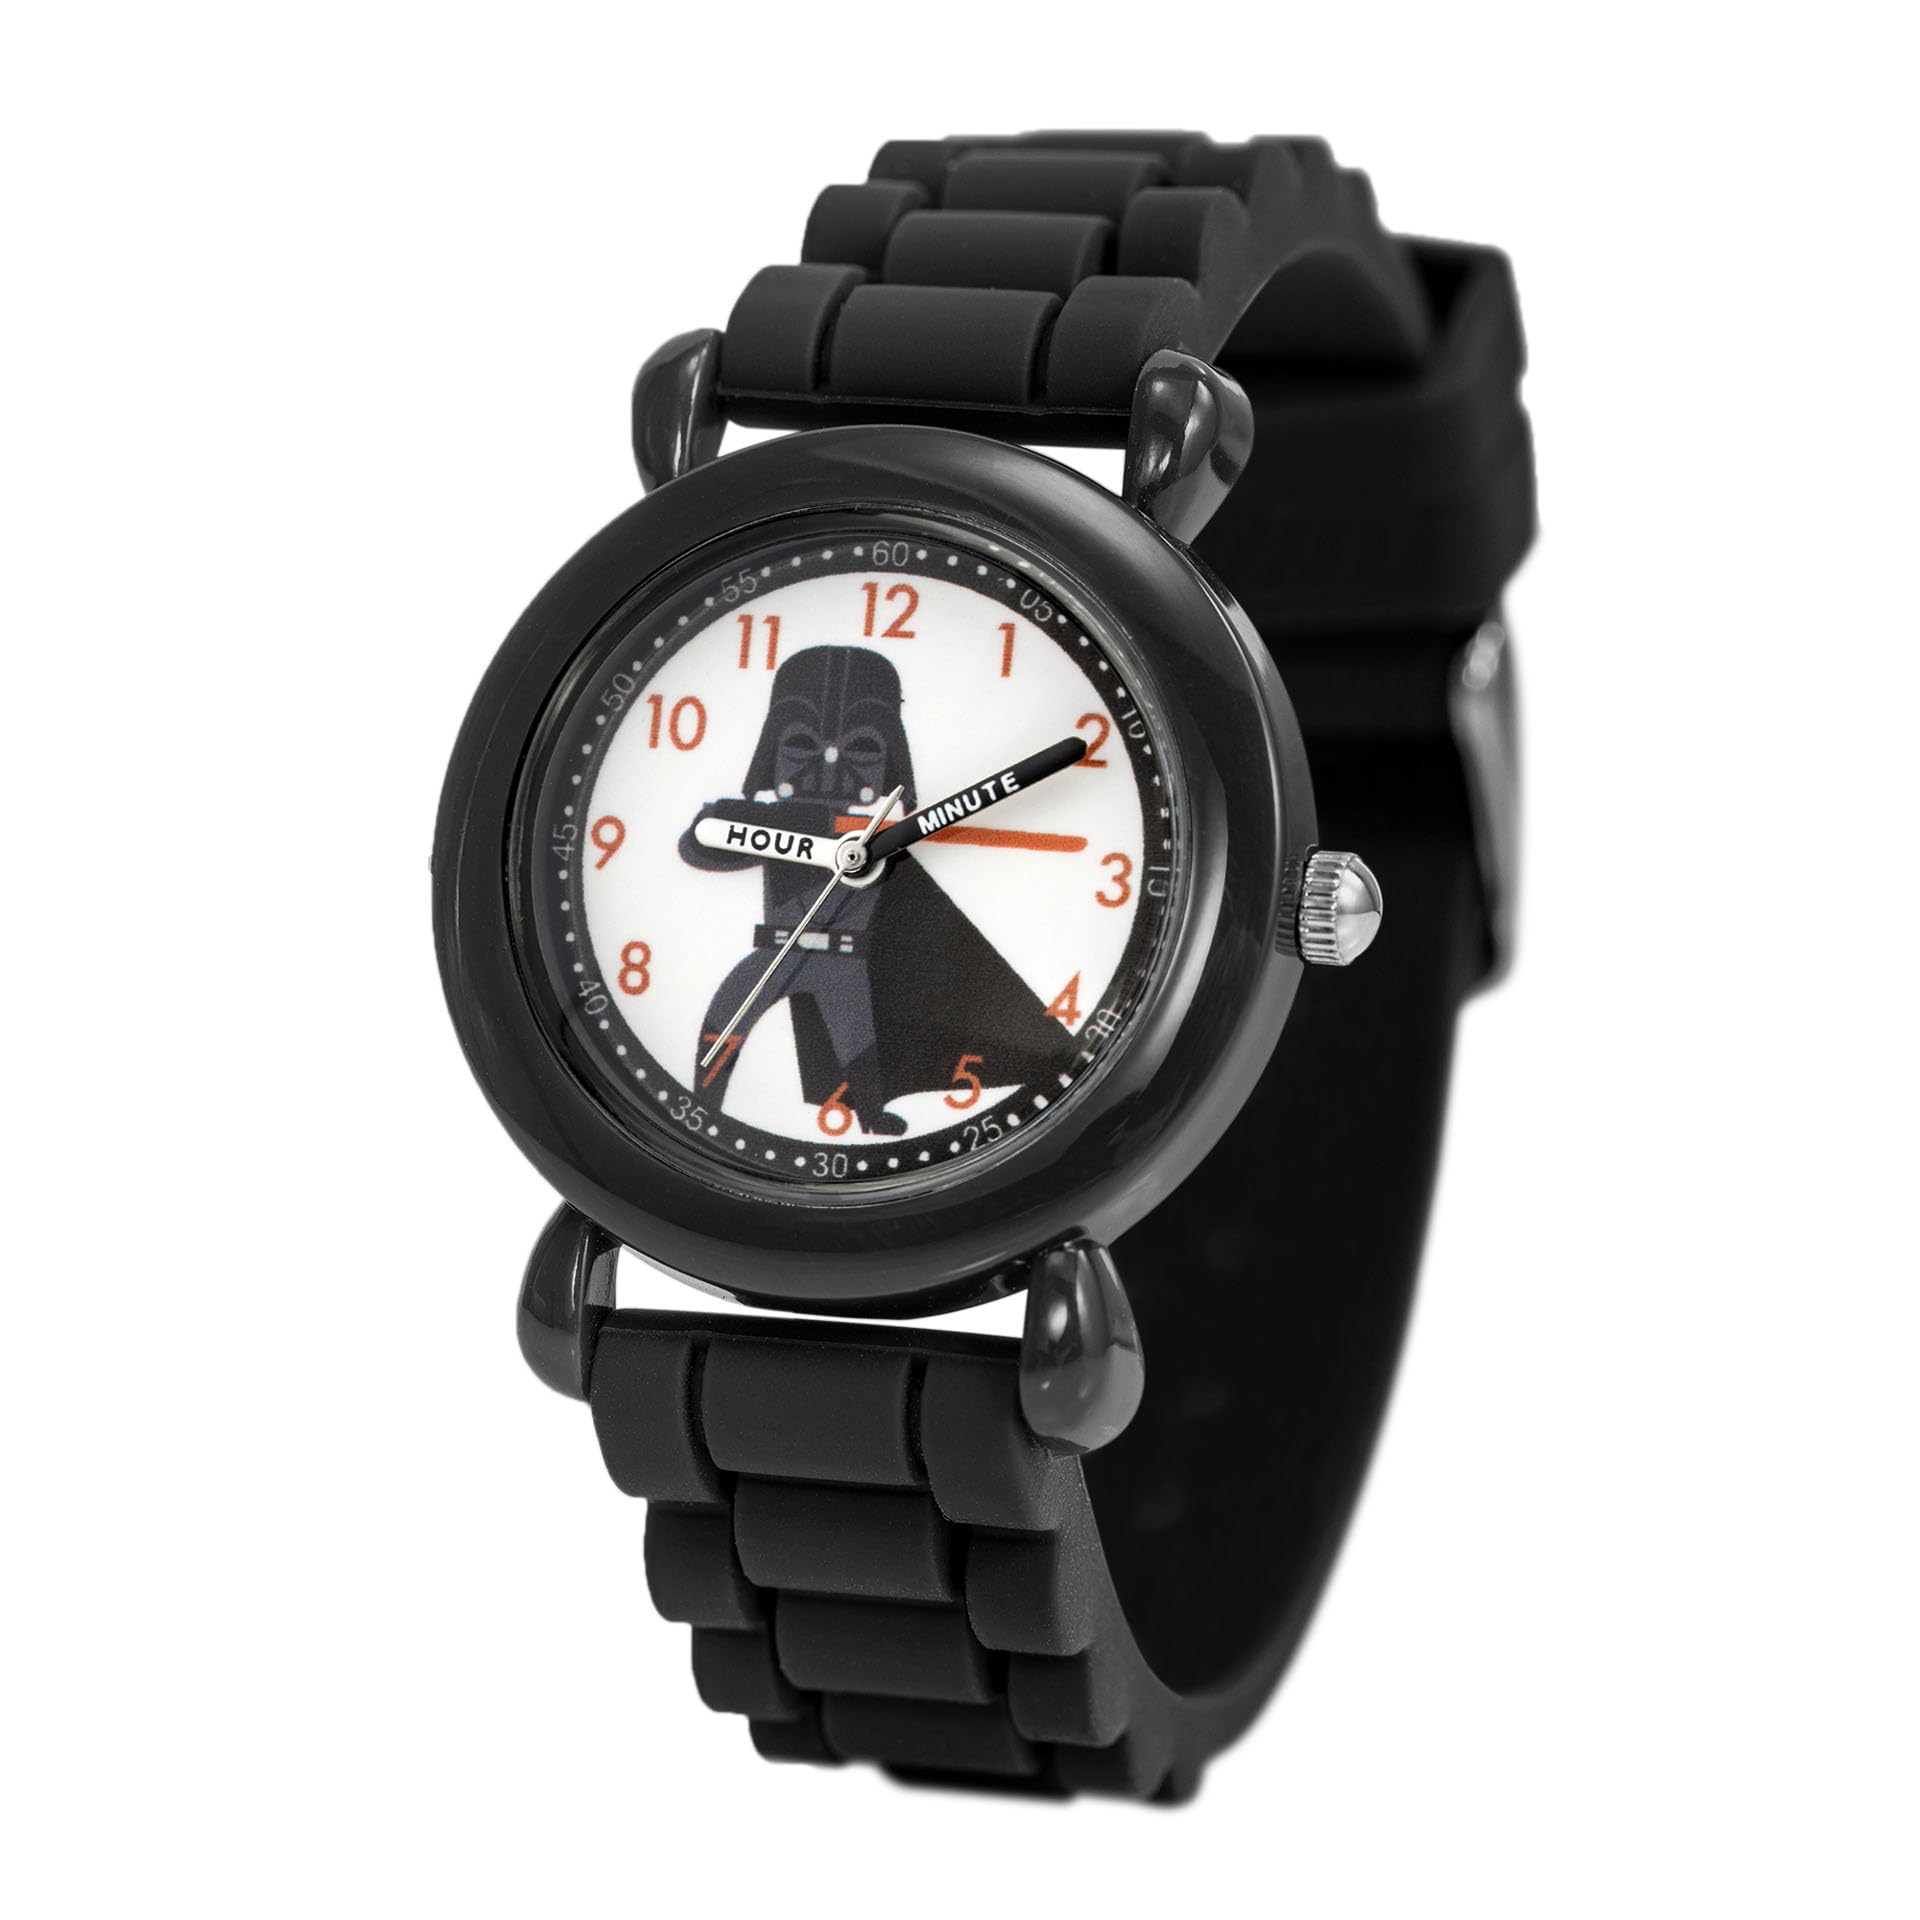 STAR WARS Kids' Plastic Time Teacher Watch, Analog Quartz Silicone Strap Watch